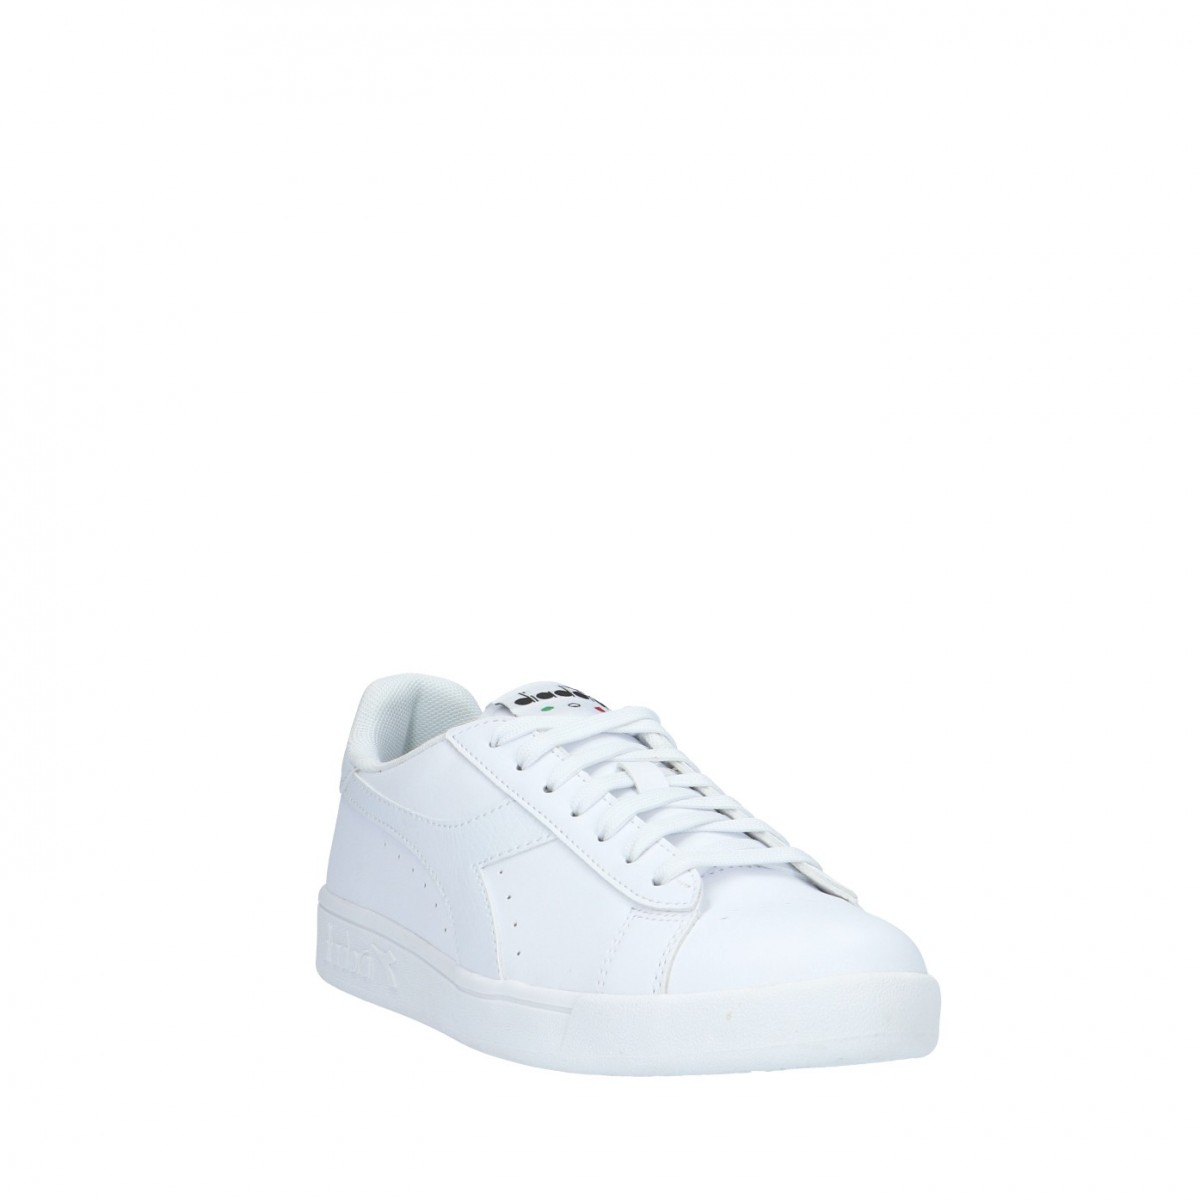 Diadora Sneaker Bianco/bianco/nero Gomma 101.178327